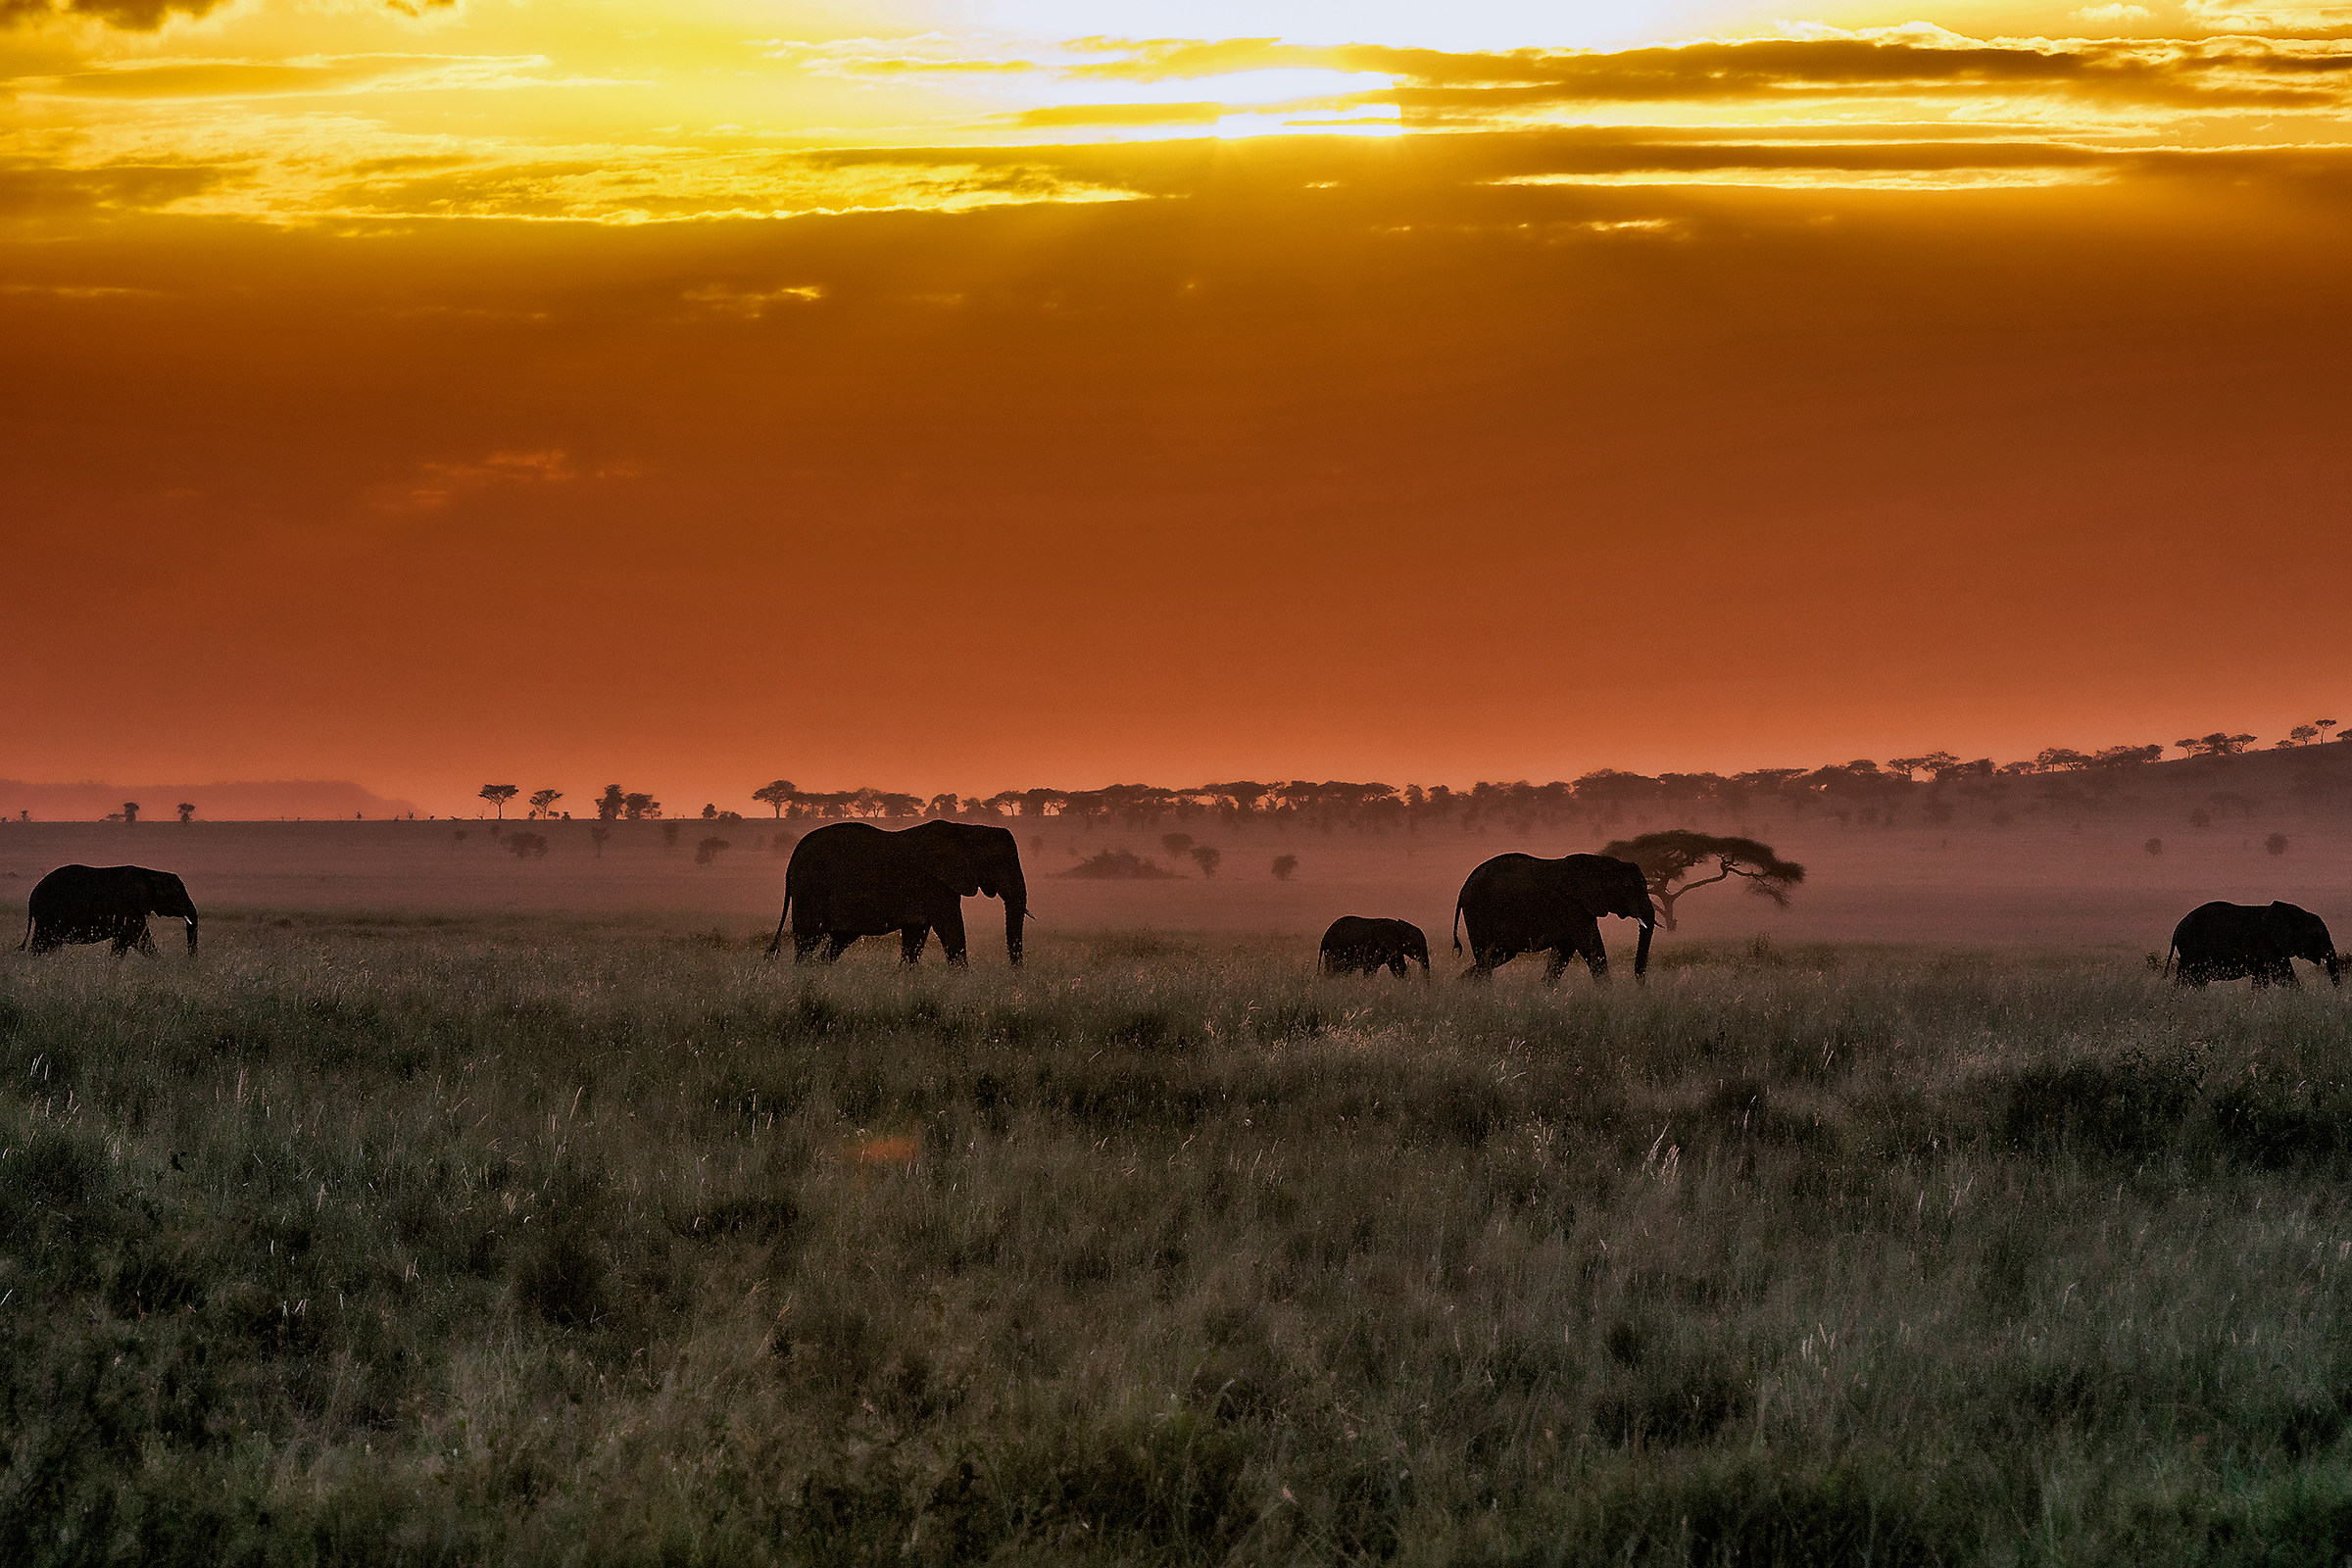 Elephants at sunset...